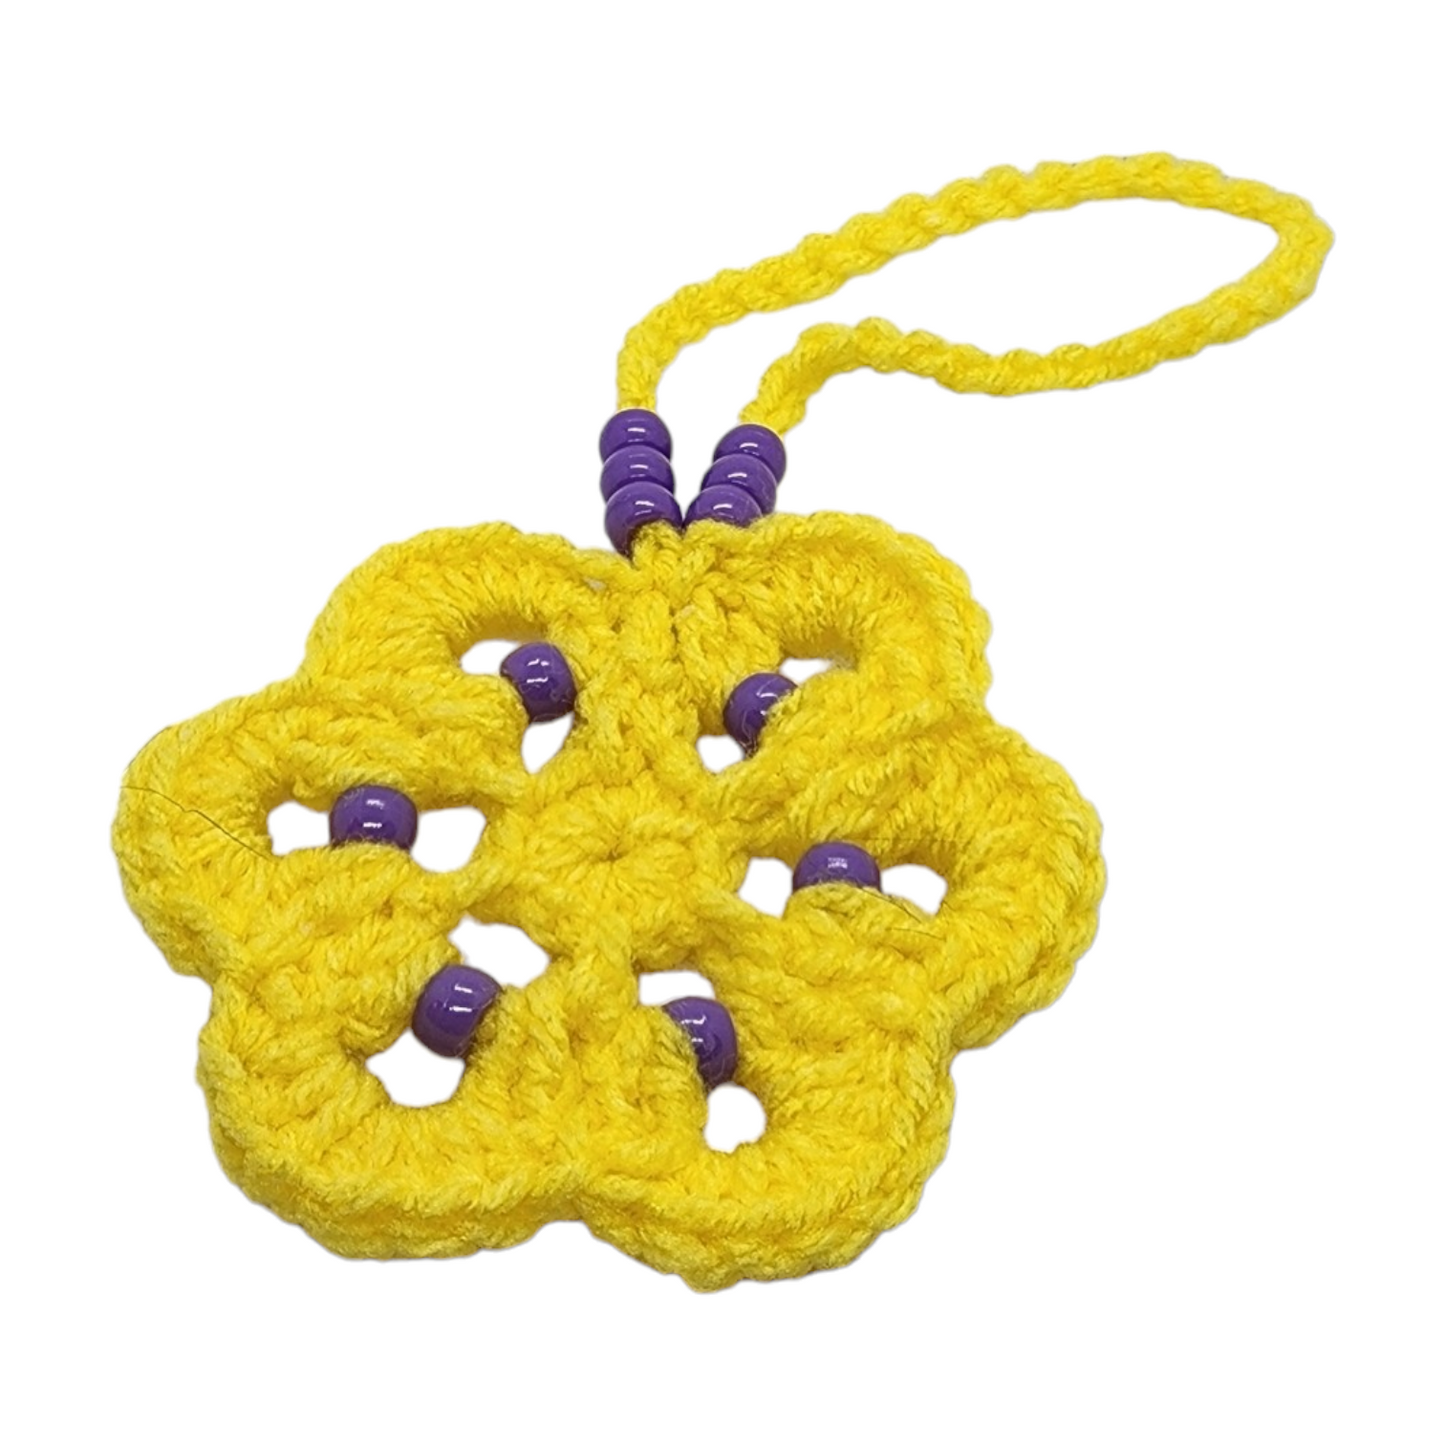 Crochet Flower Bead Toy